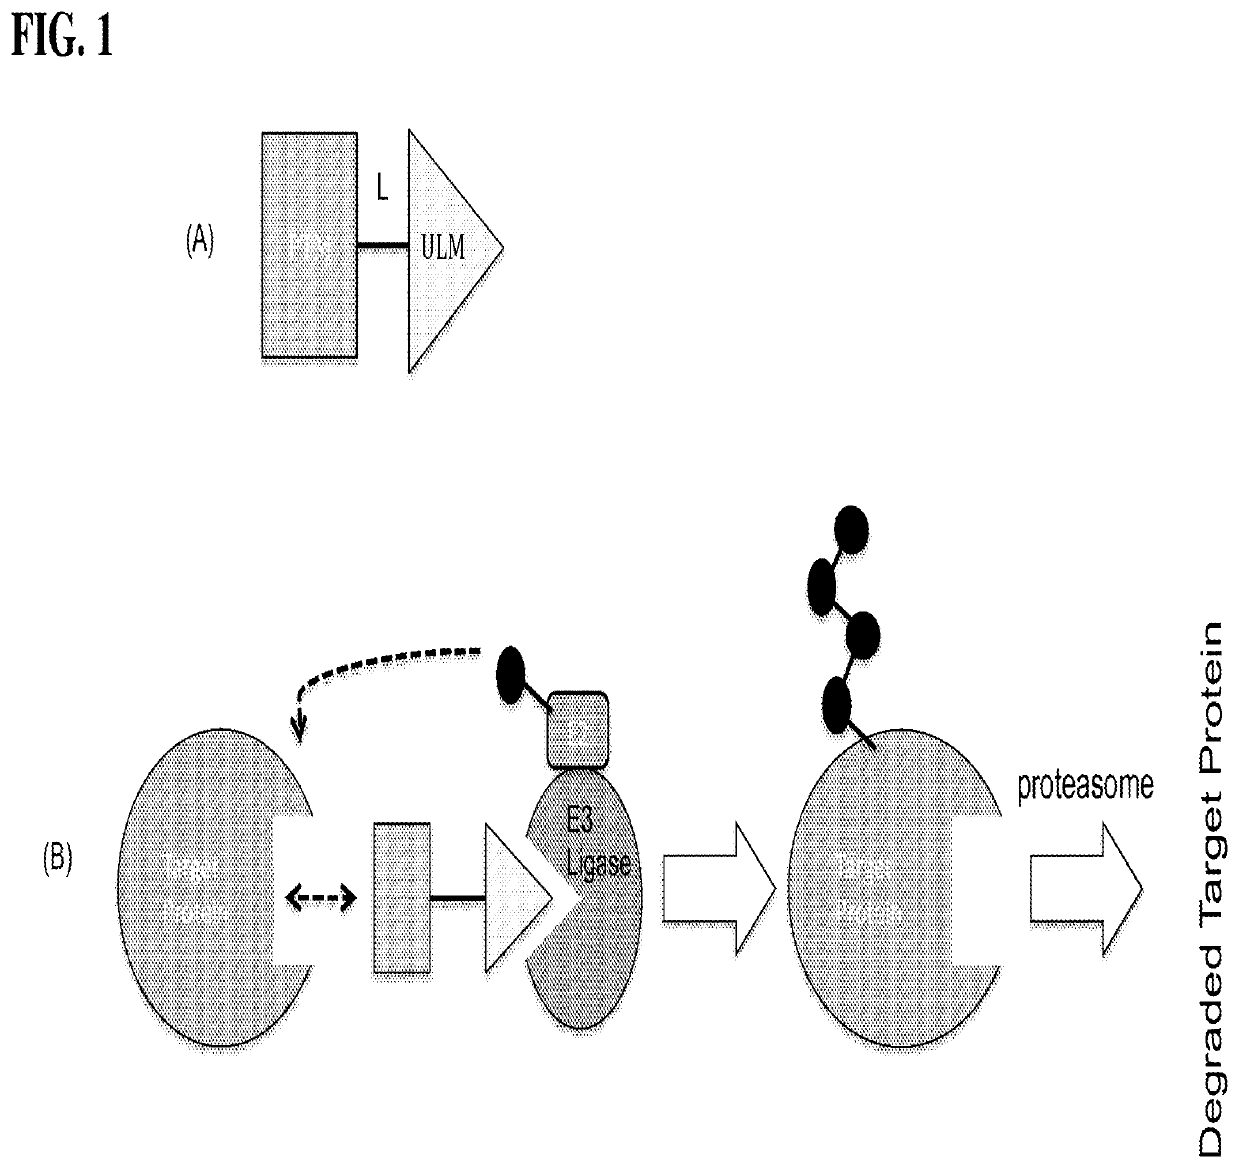 Imide-based modulators of proteolysis and associated methods of use